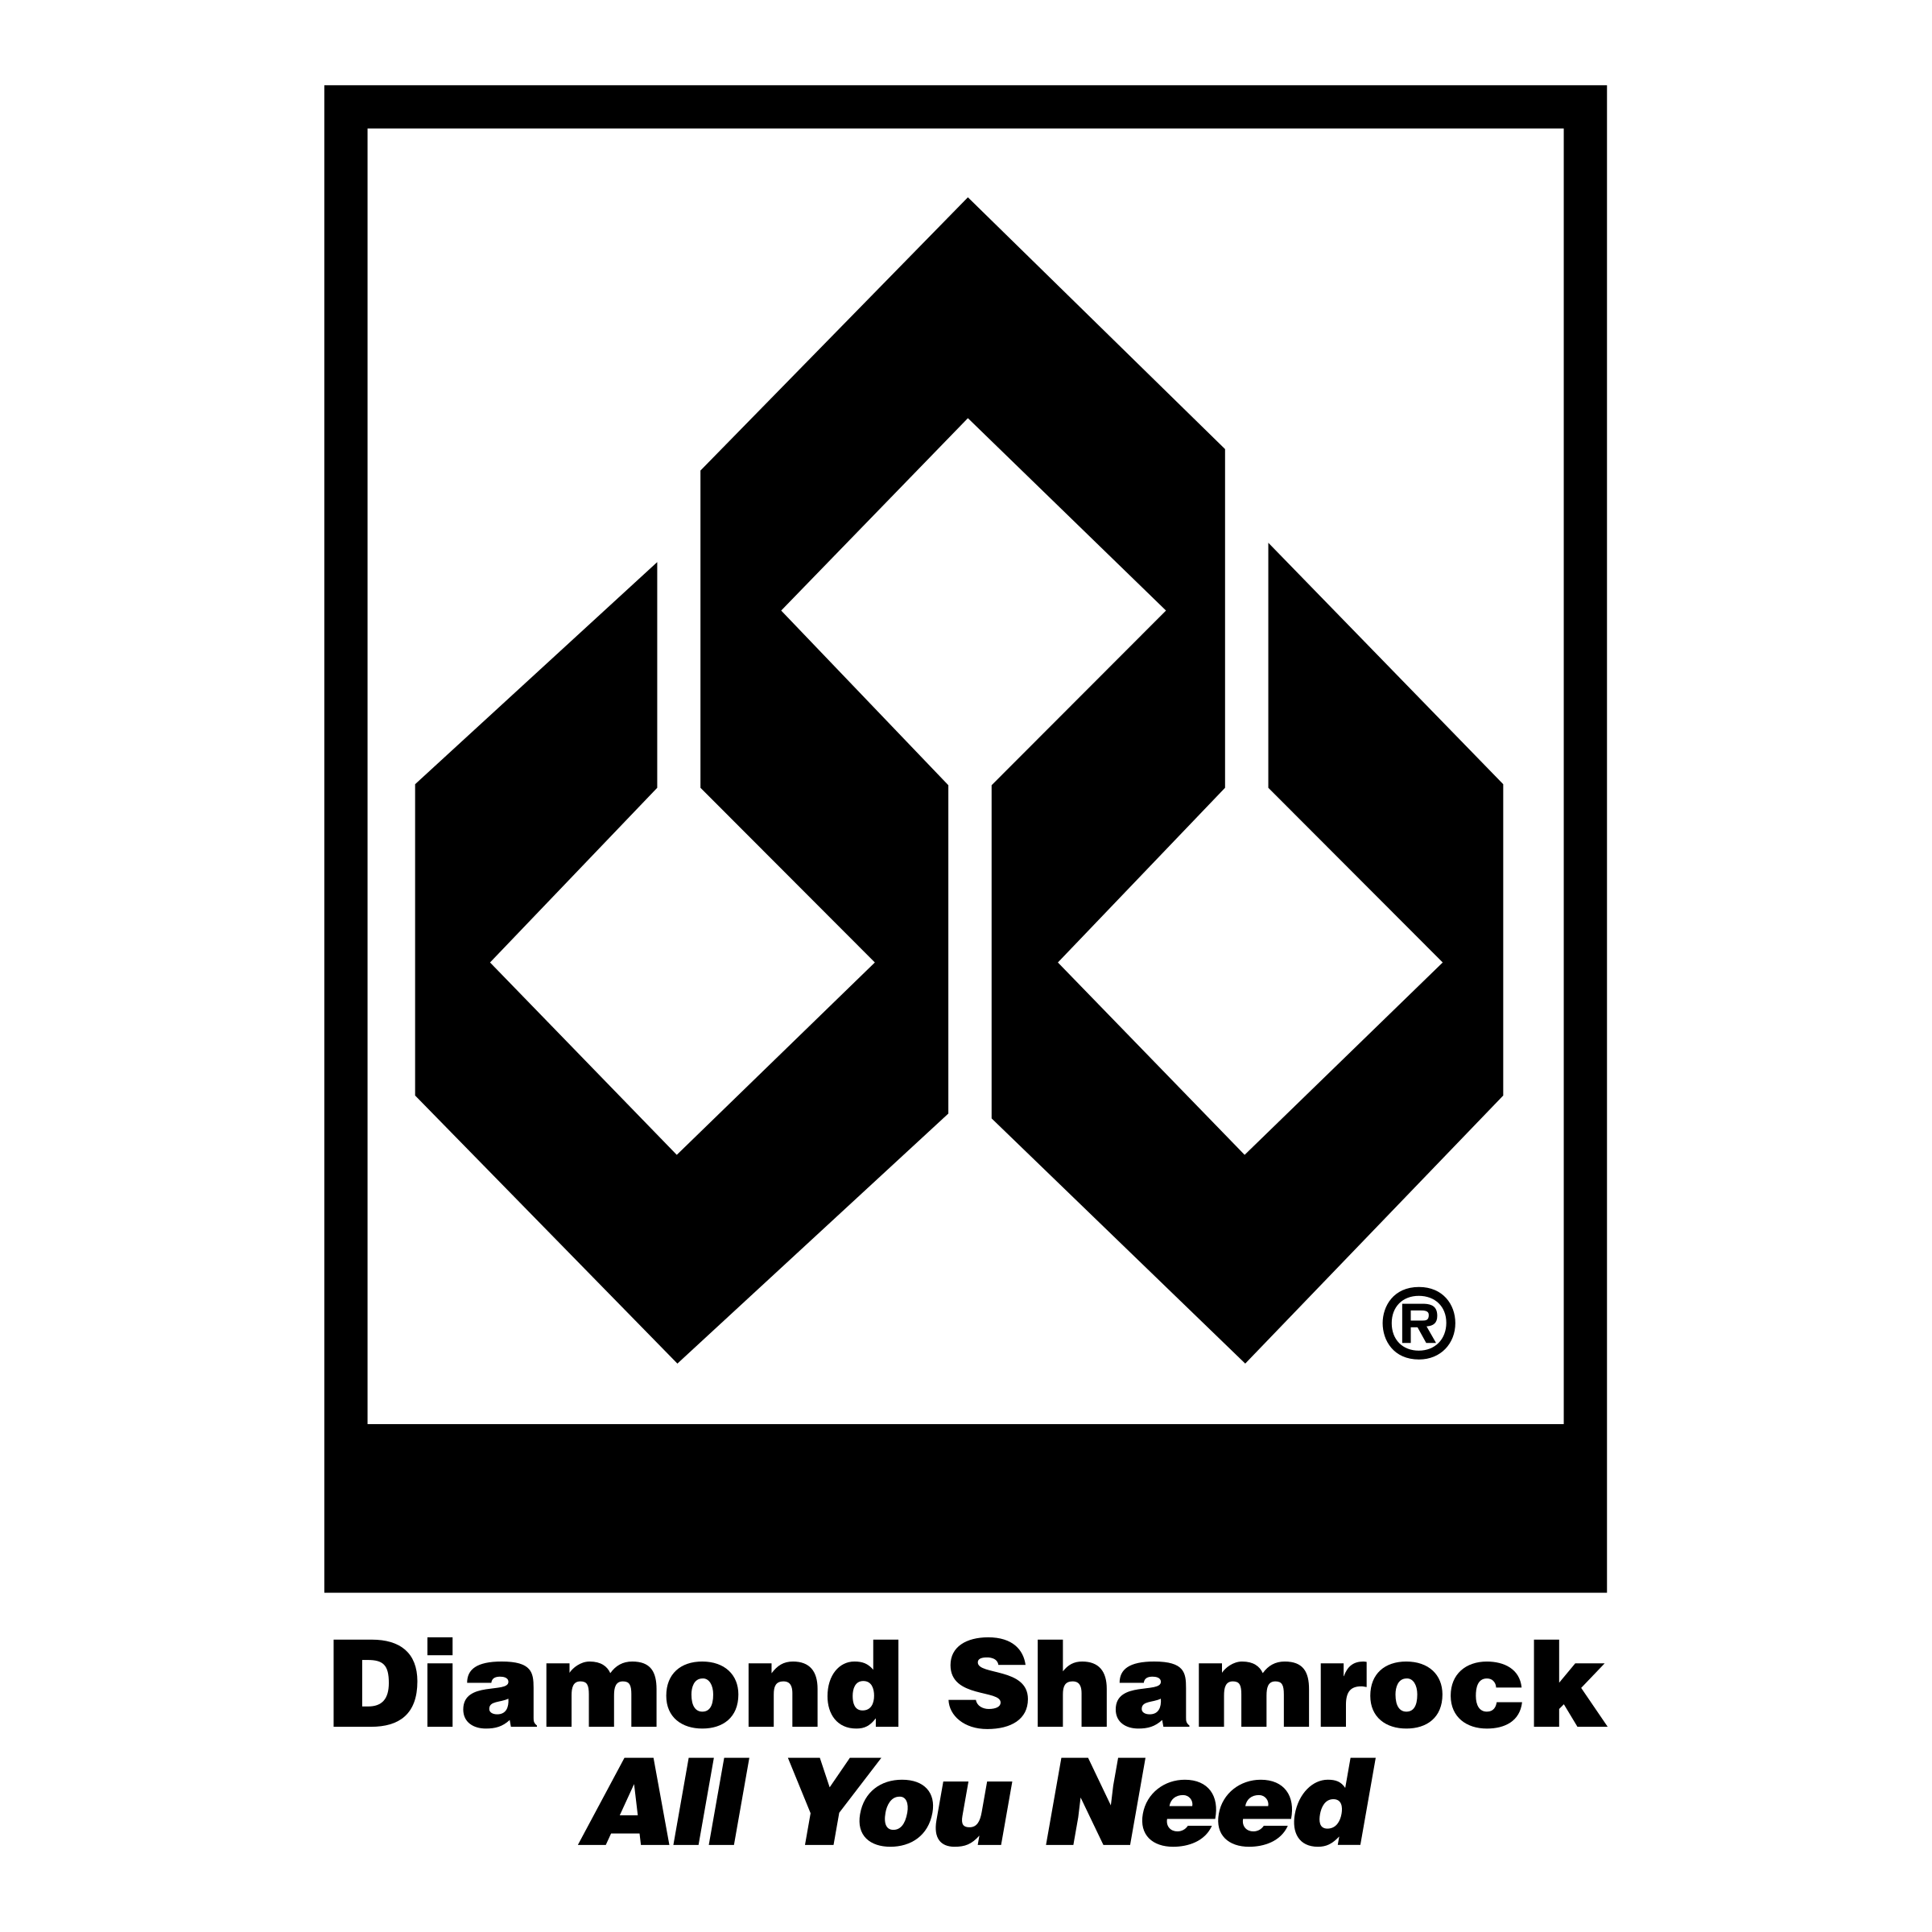 Diamond Transparent Logo - Diamond Shamrock Logo PNG Transparent & SVG Vector - Freebie Supply